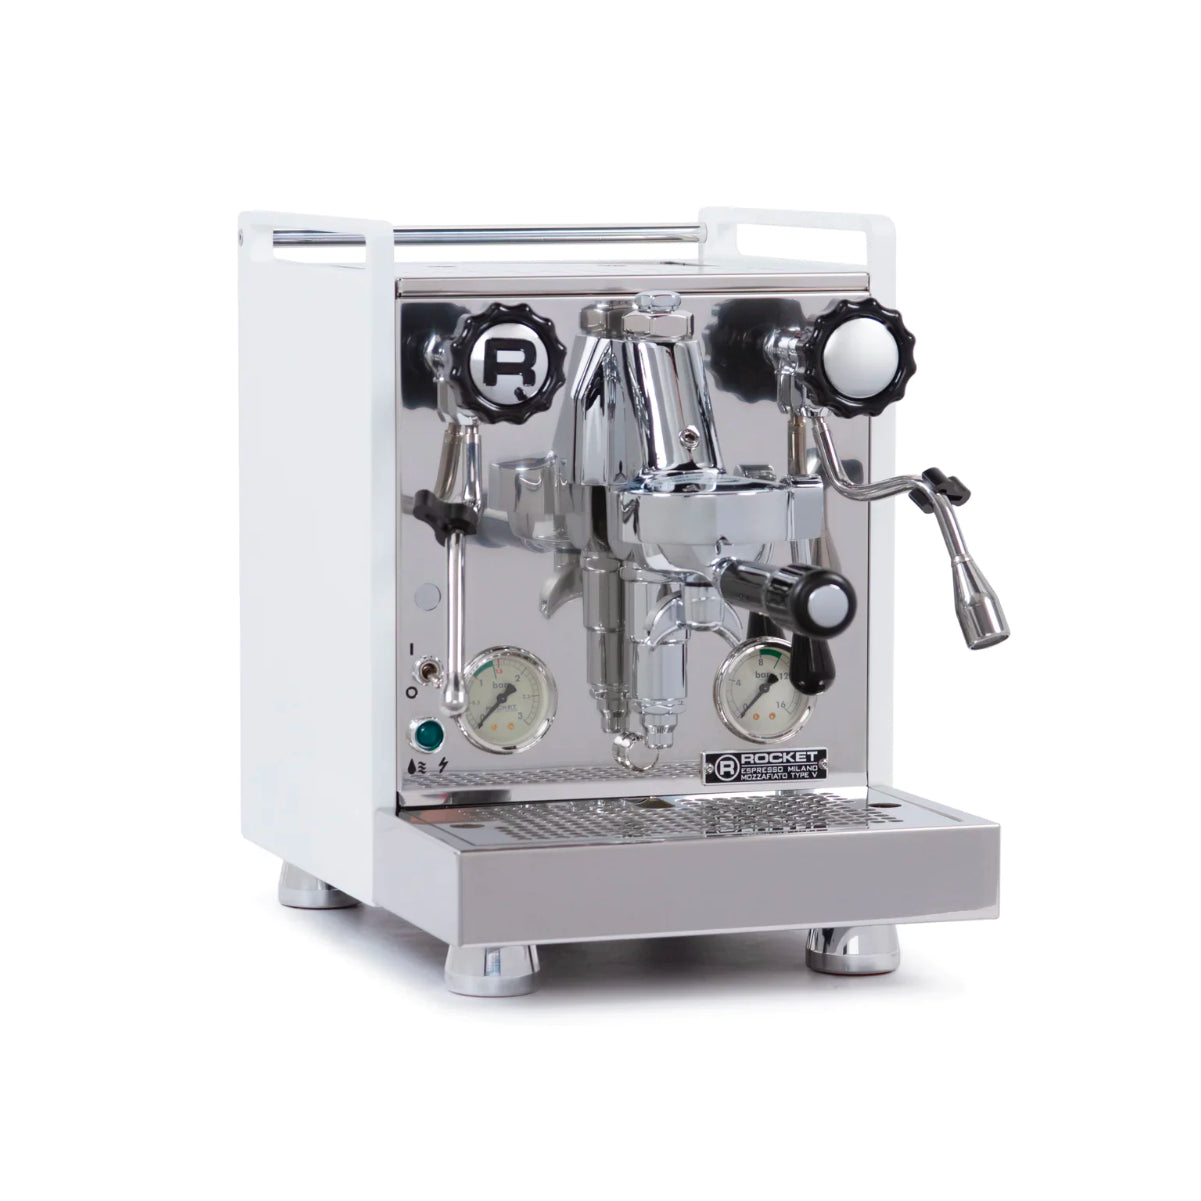 Rocket Mozzafiato Cronometro Type V Espresso Machine With PID And Short Timer (Chrome)